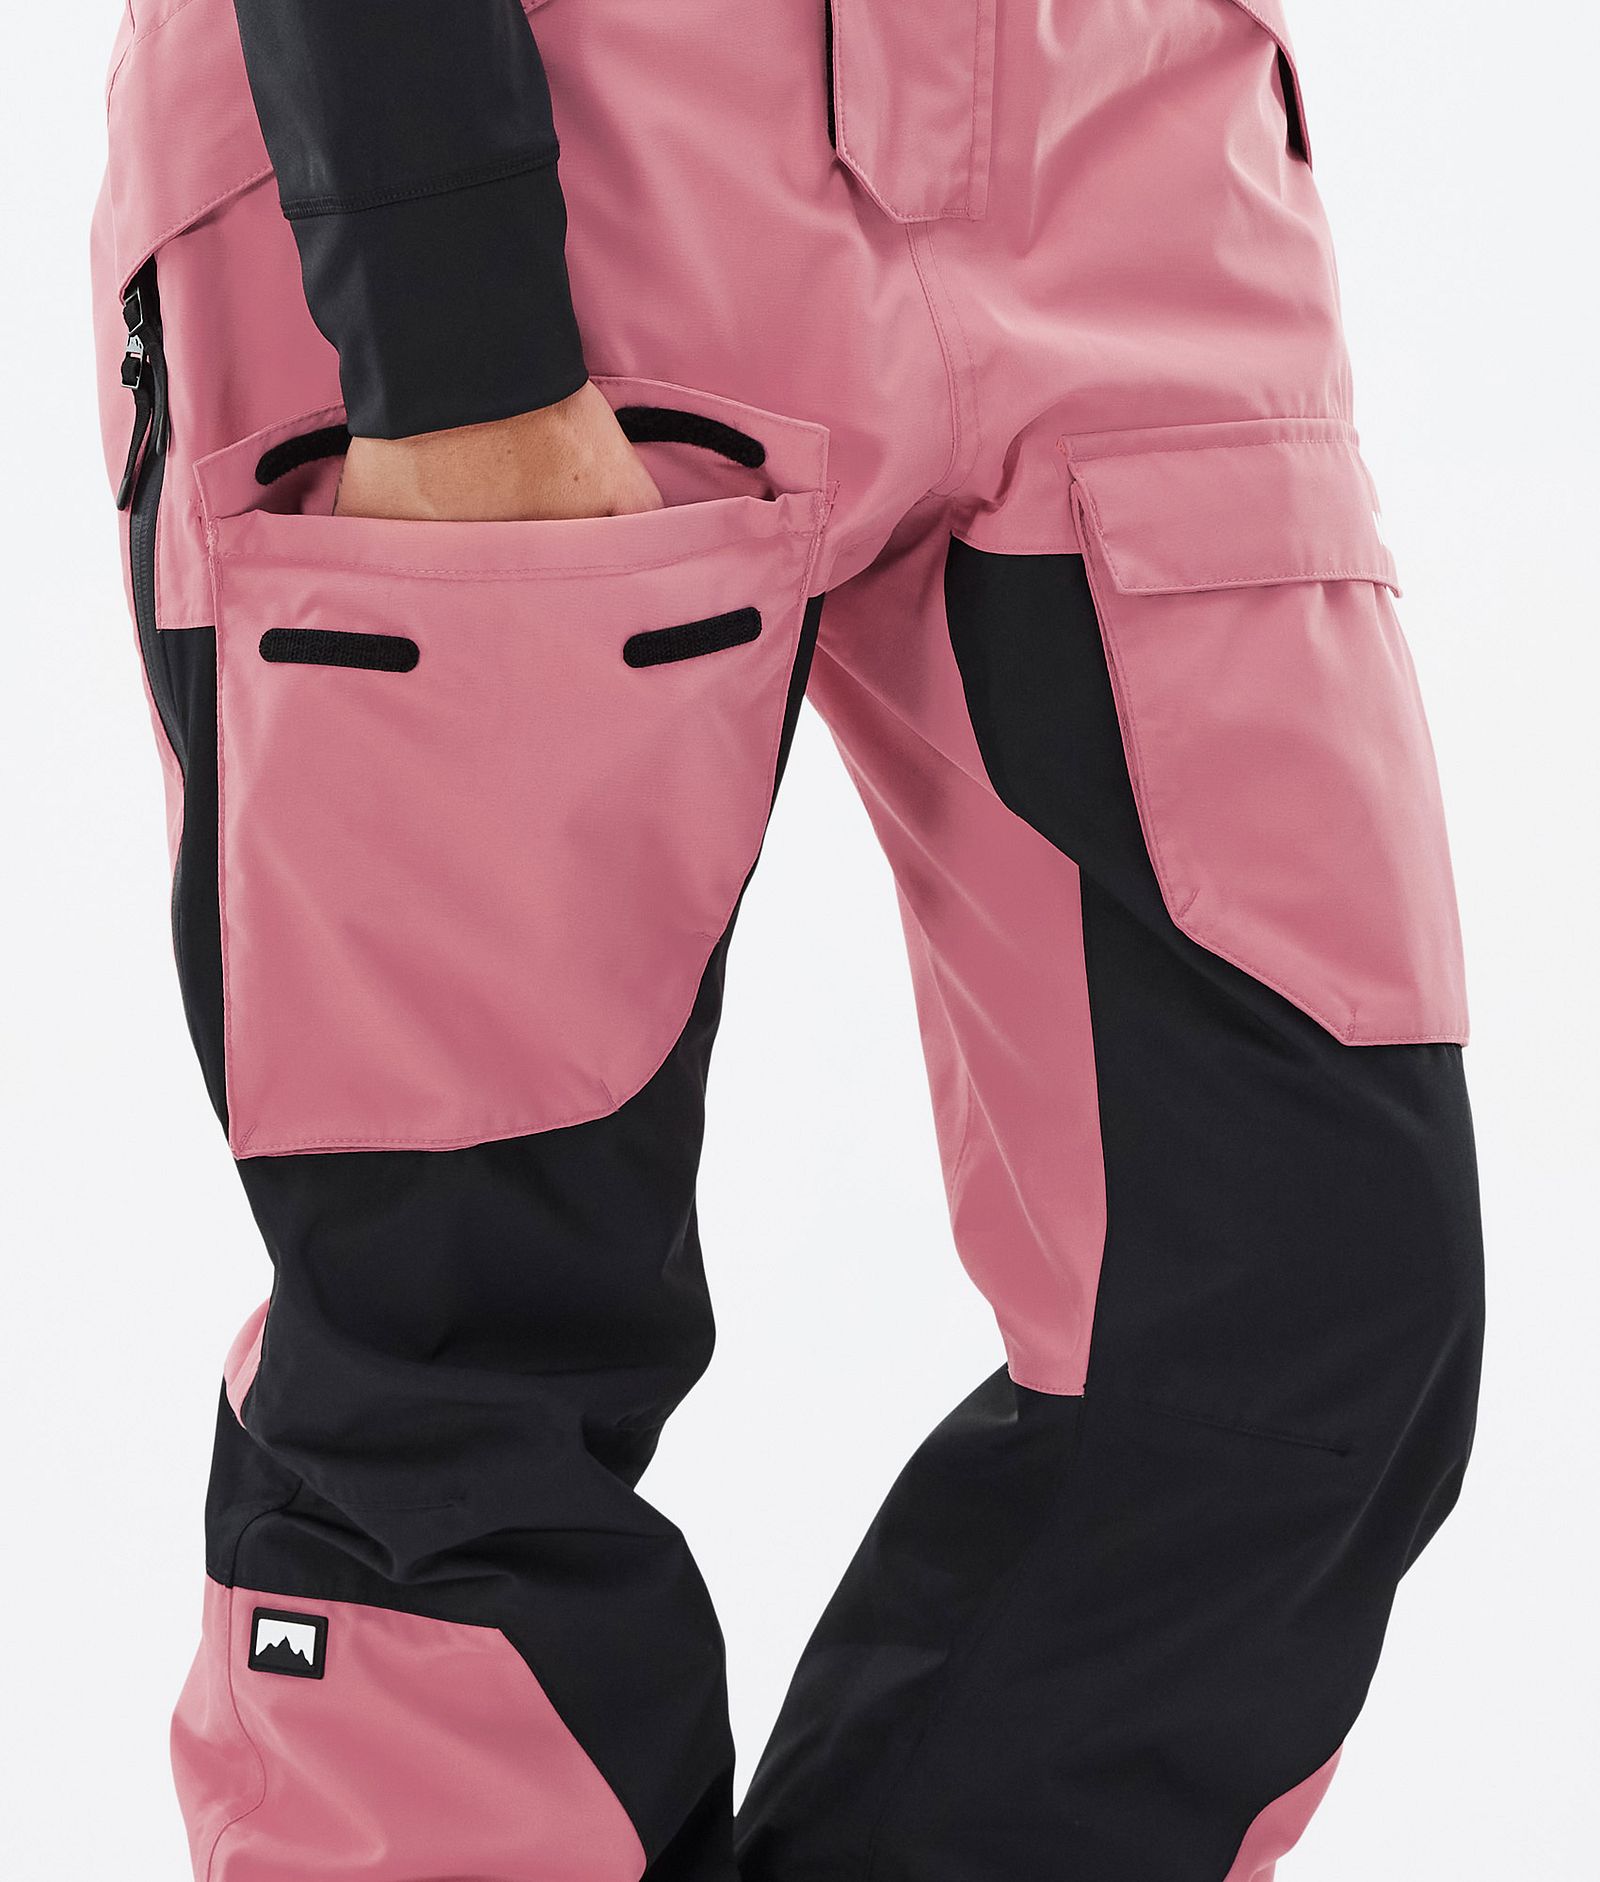 Fawk W Snowboardbukse Dame Pink/Black